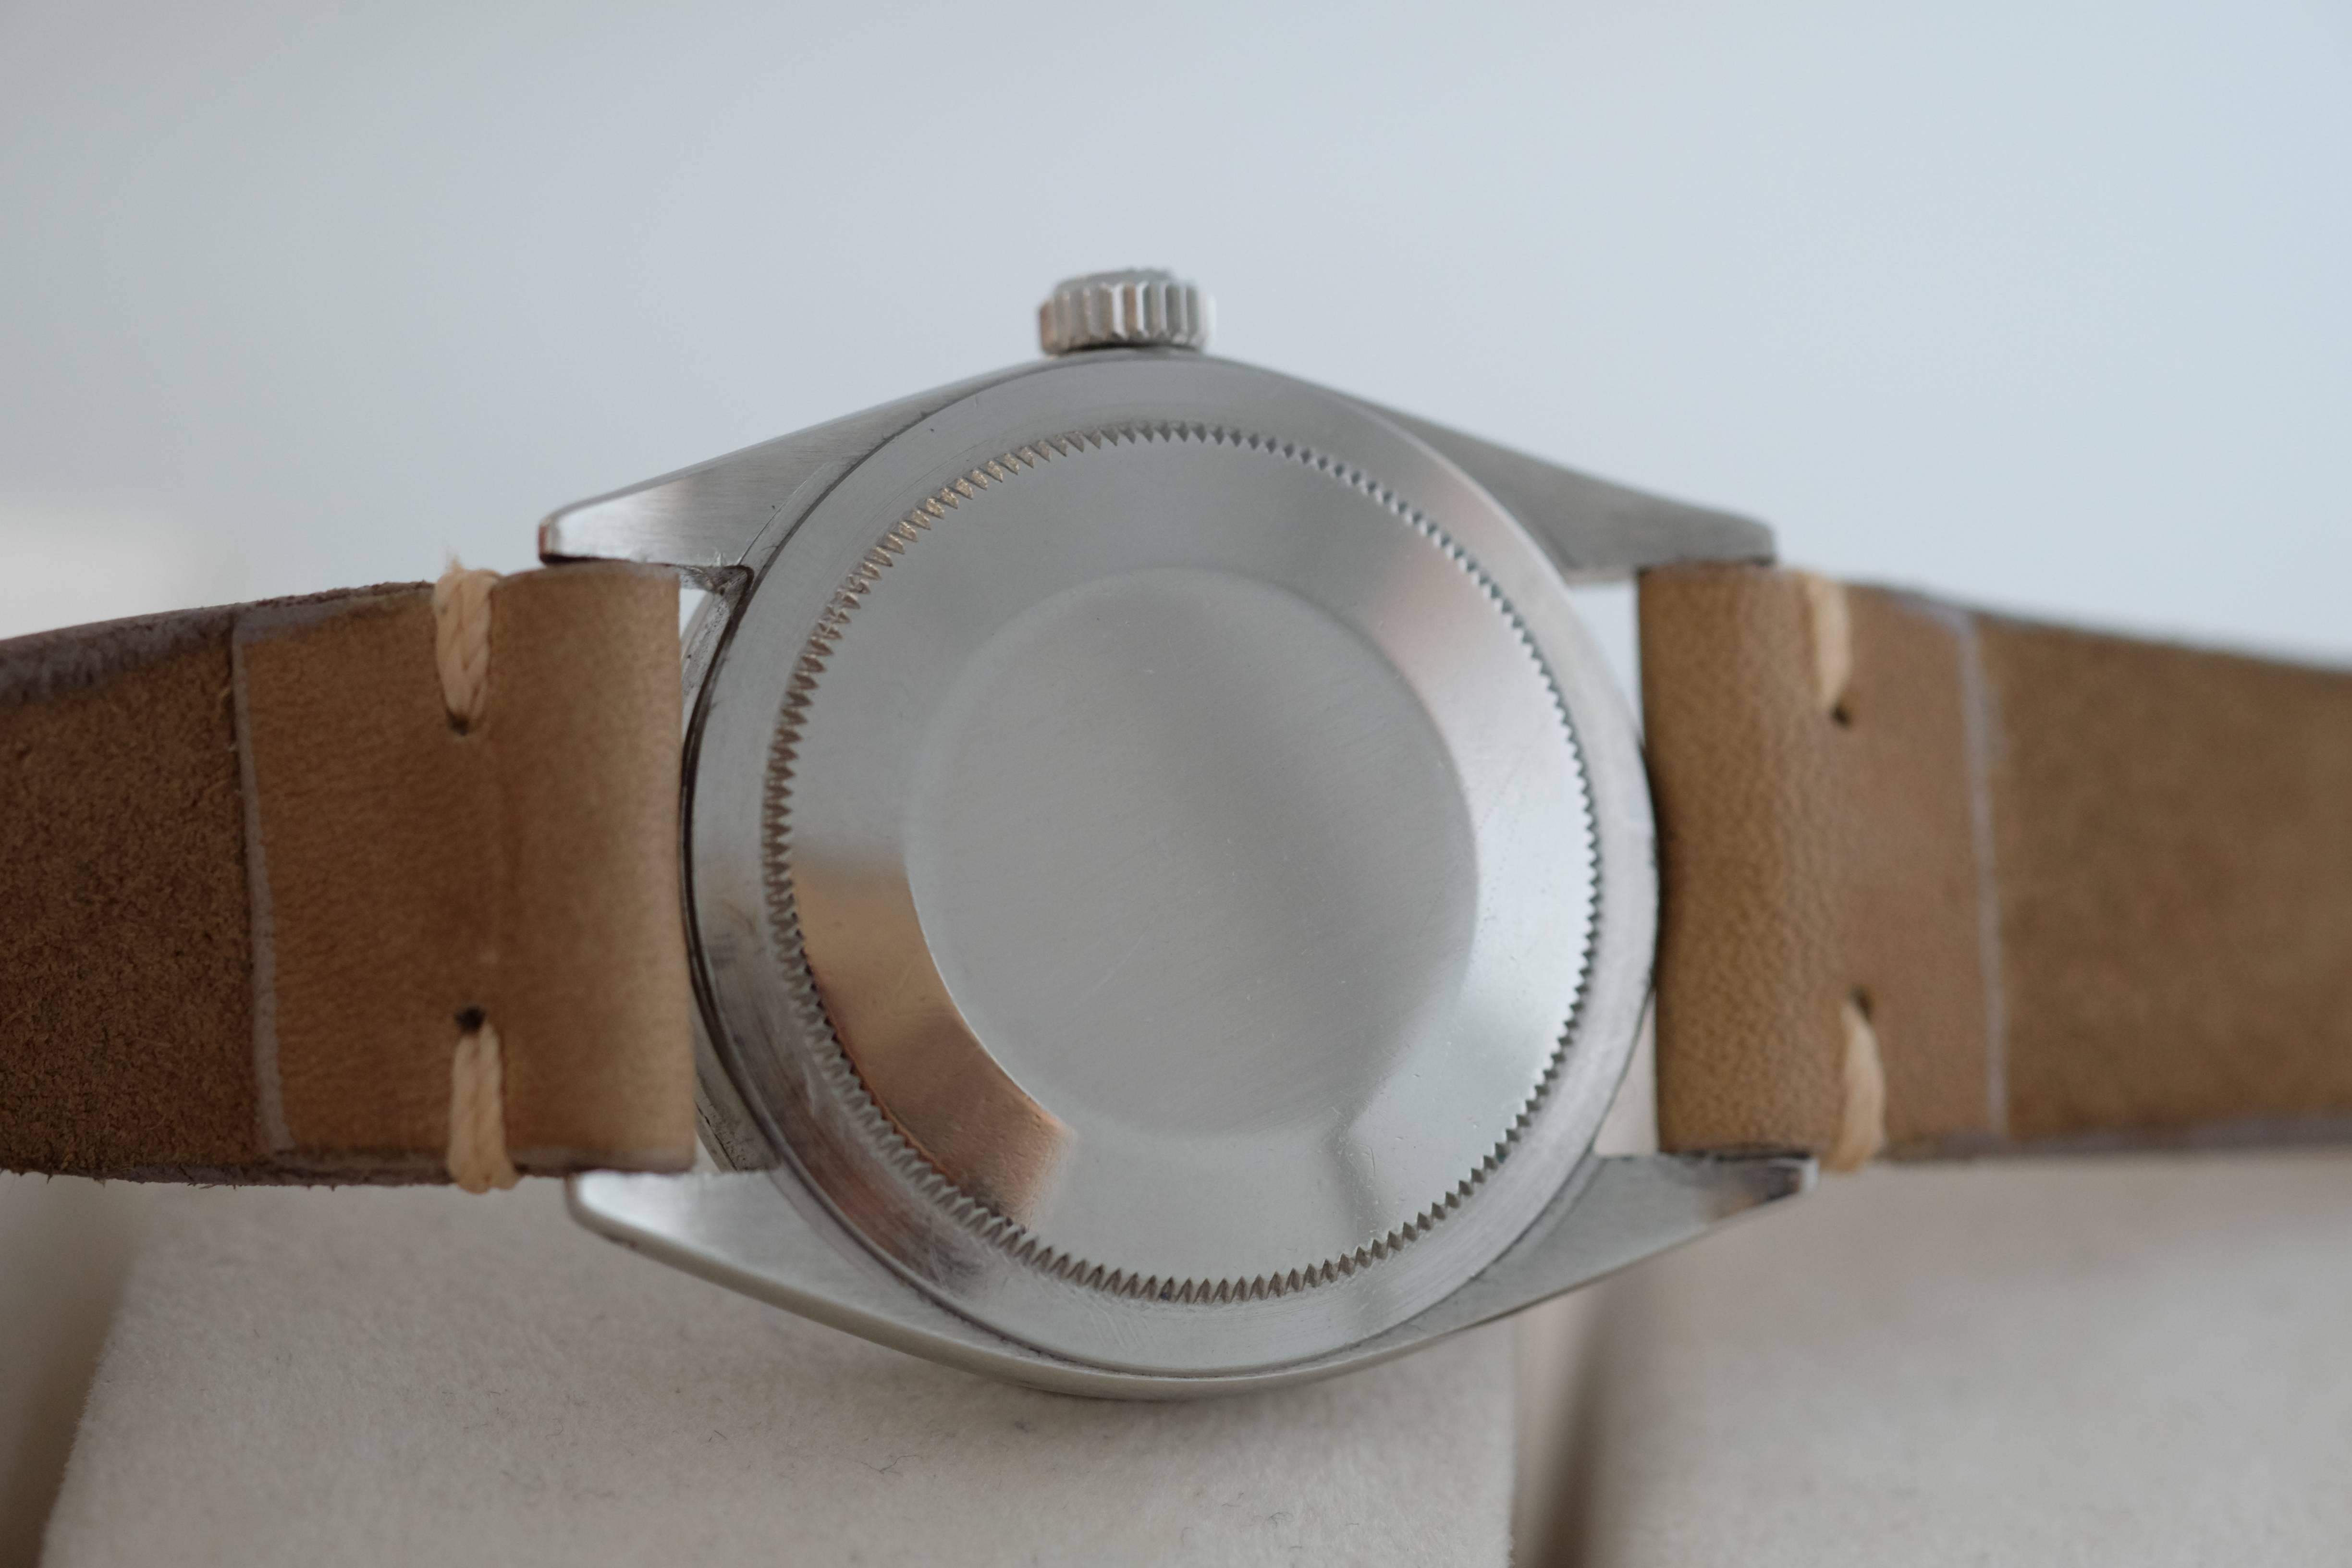 Rolex Stainless Steel Tropical Dial Explorer Wristwatch Ref 1016 2